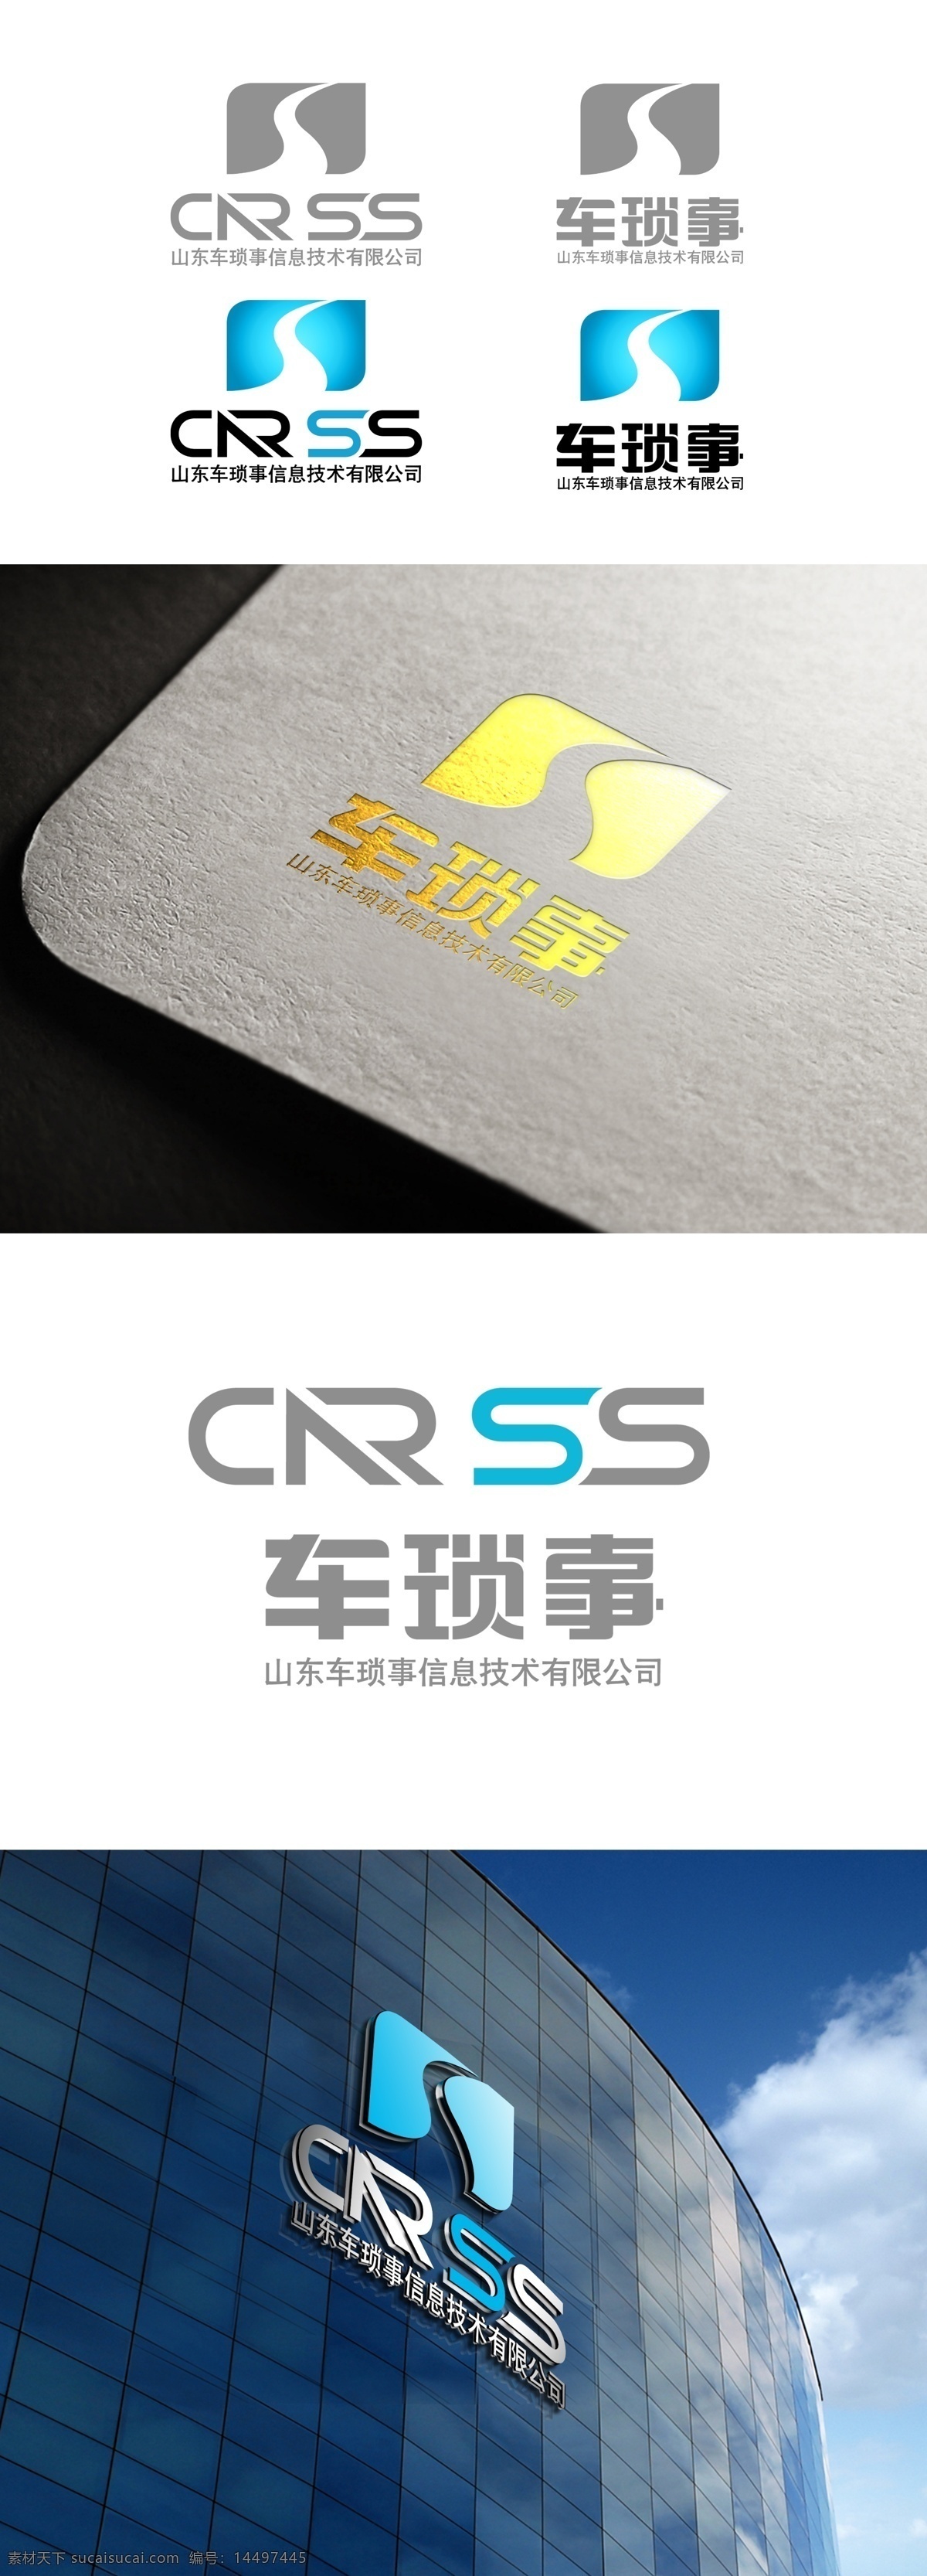 logo 效果 展示 logo设计 效果展示 烫金效果 中文logo 英文logo 共享 图 层 文件 标志图标 企业 标志